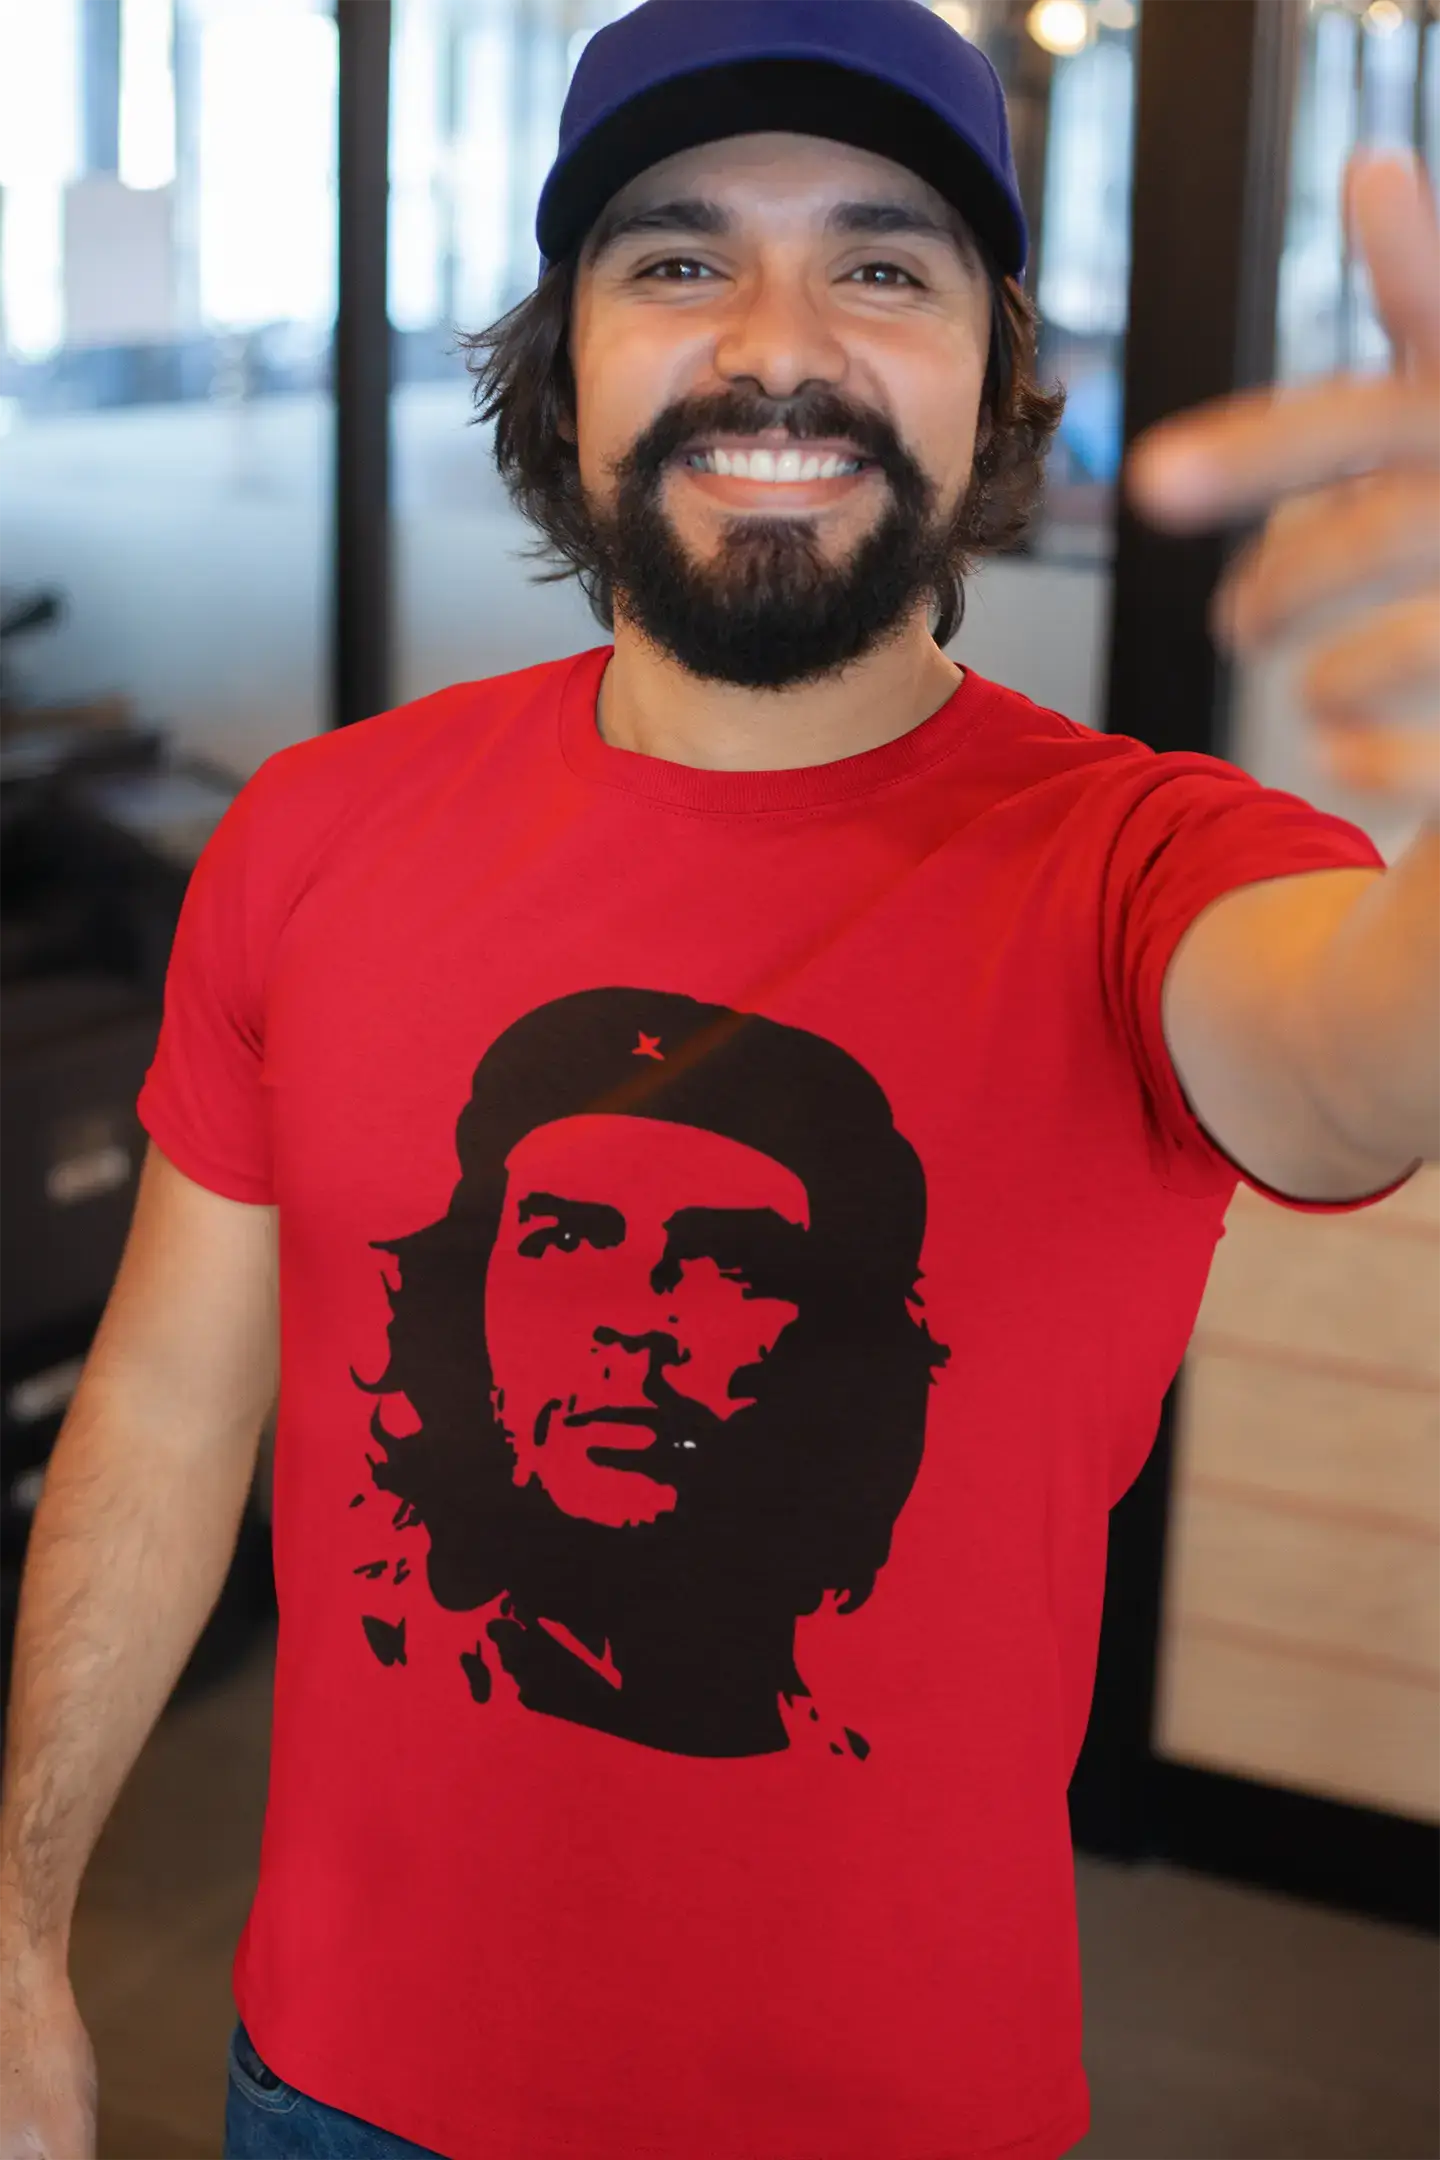 Che Guevara White, Old Celebrities, White, Men's Short Sleeve Round Neck T-shirt, gift t-shirt 00313